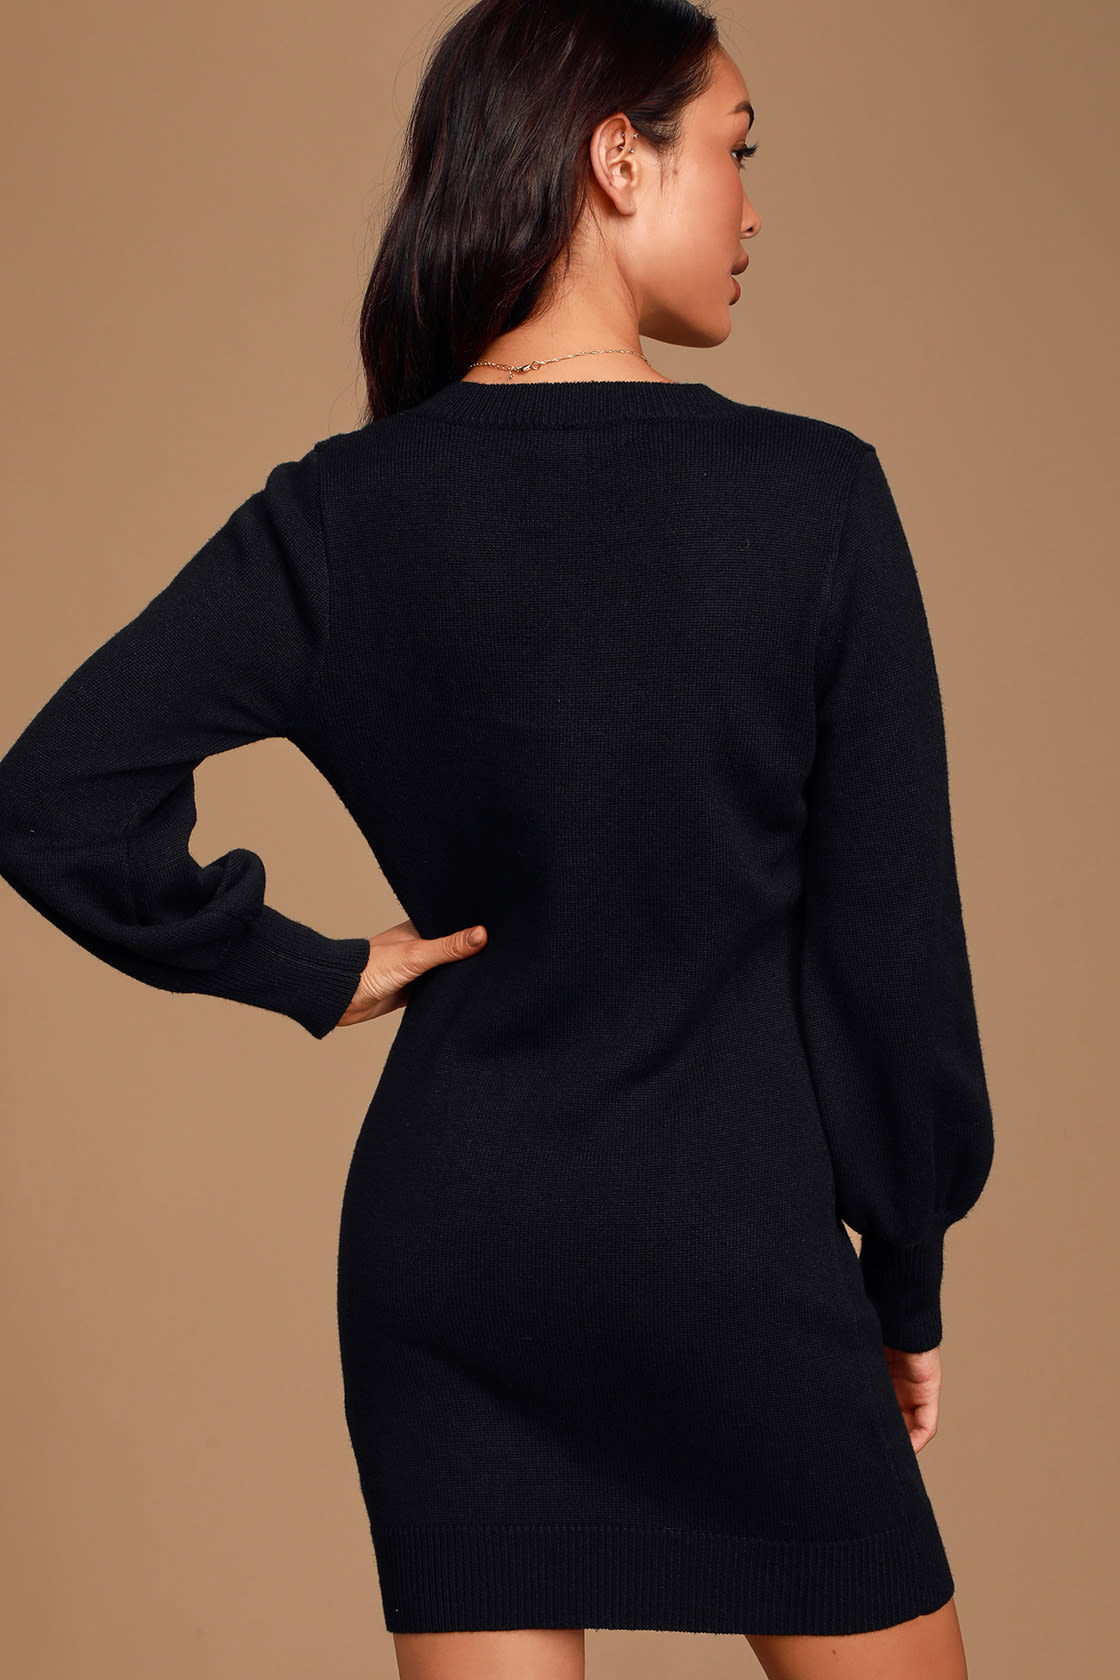 Lulus long sleeve sweater dress size M